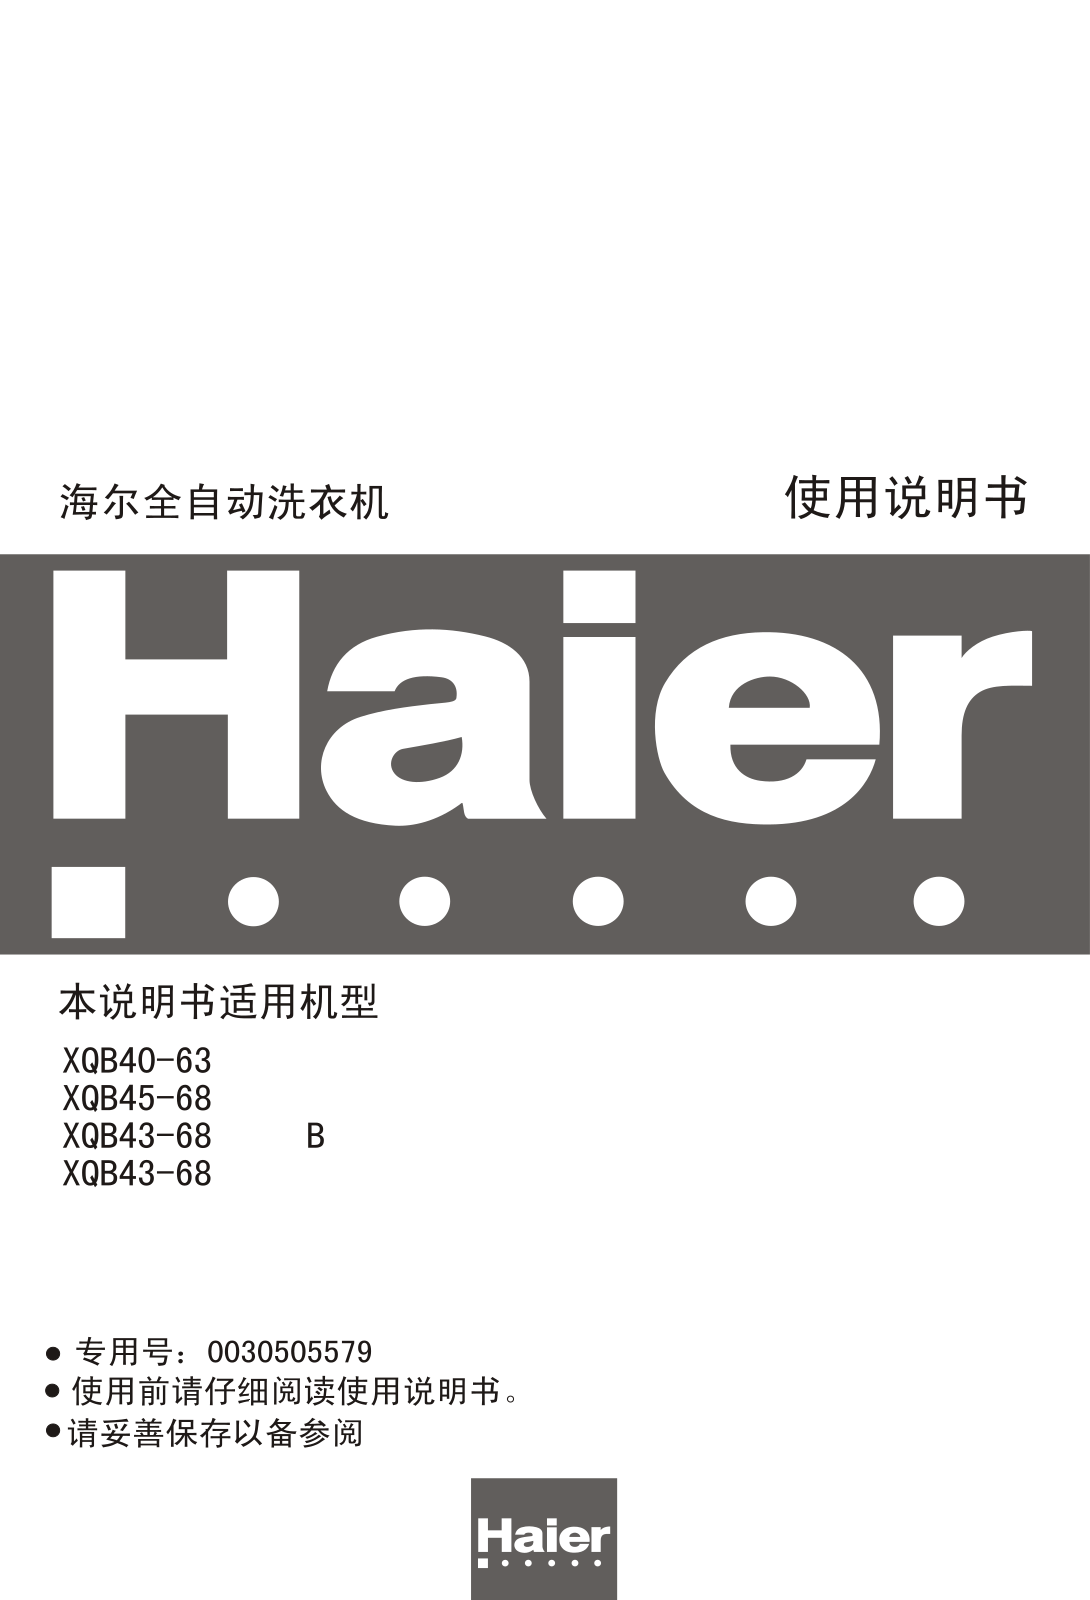 Haier XQB40-63, XQB45-68, XQB43-68 B, XQB43-68 User Manual